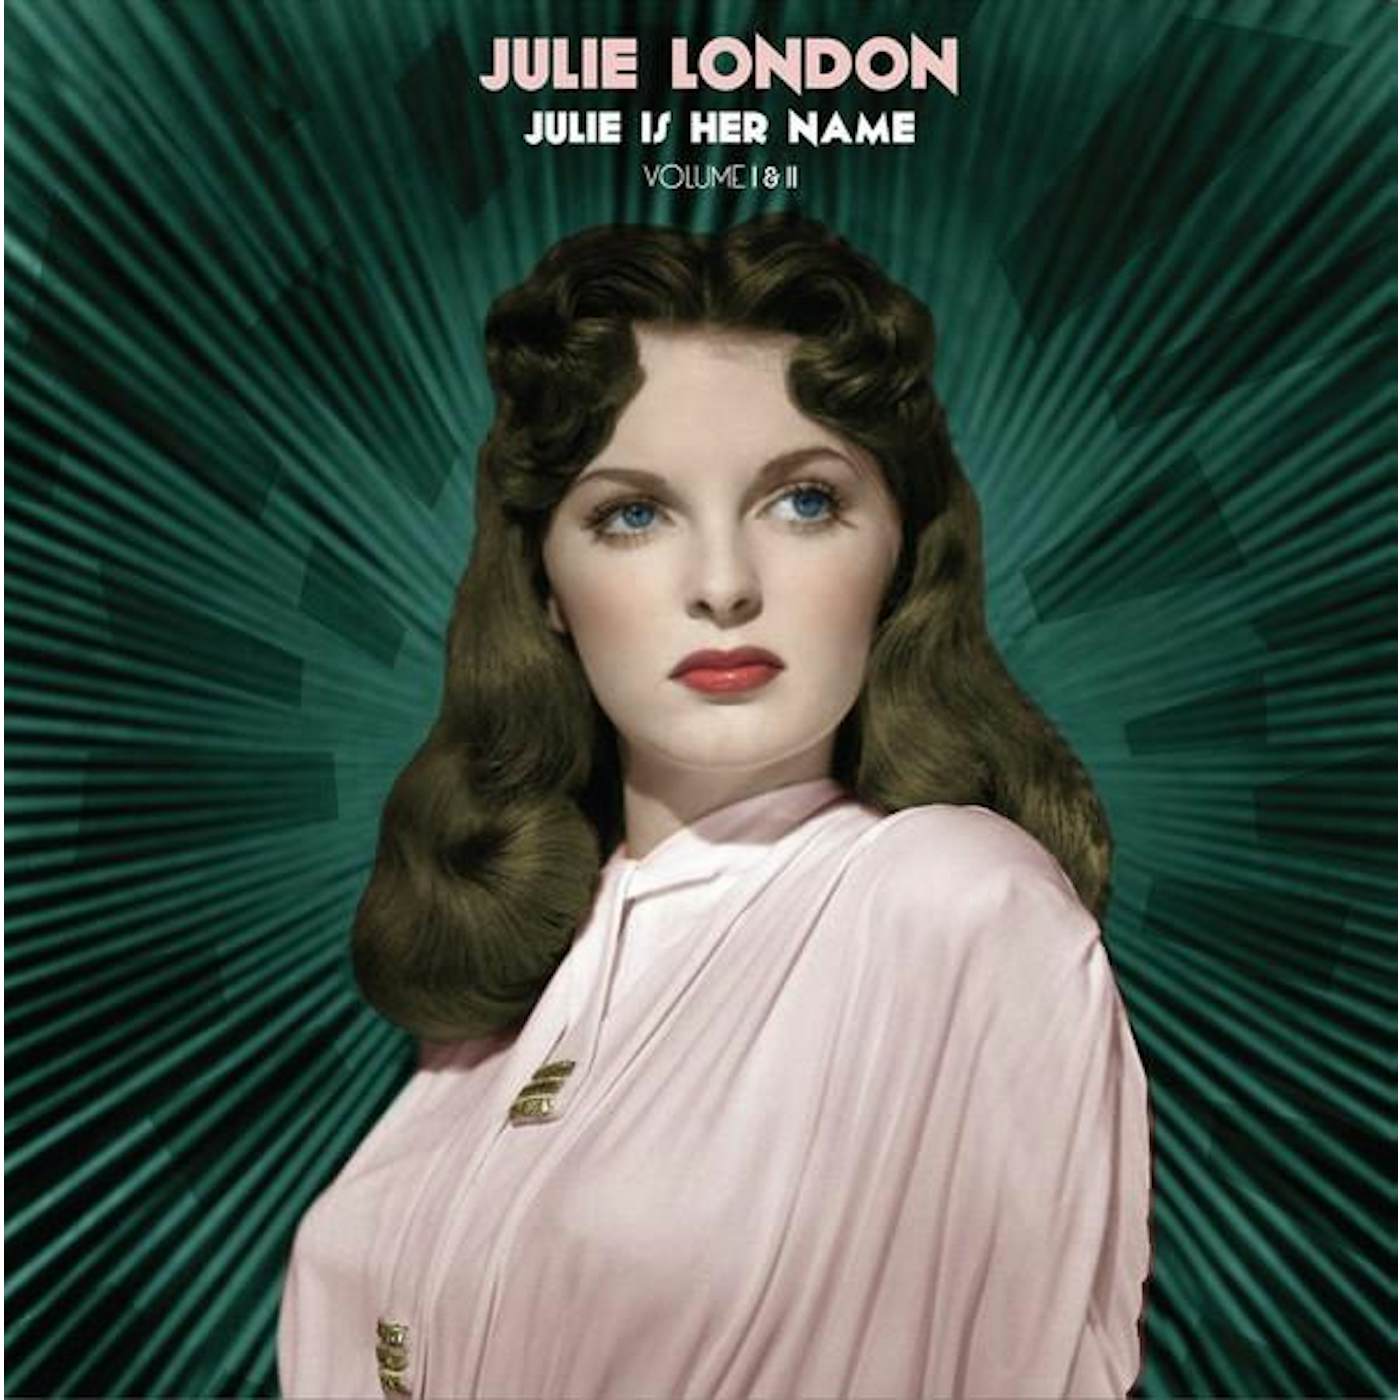 Julie London JULIE IS HER NAME VOL 1 & 2 Vinyl Record